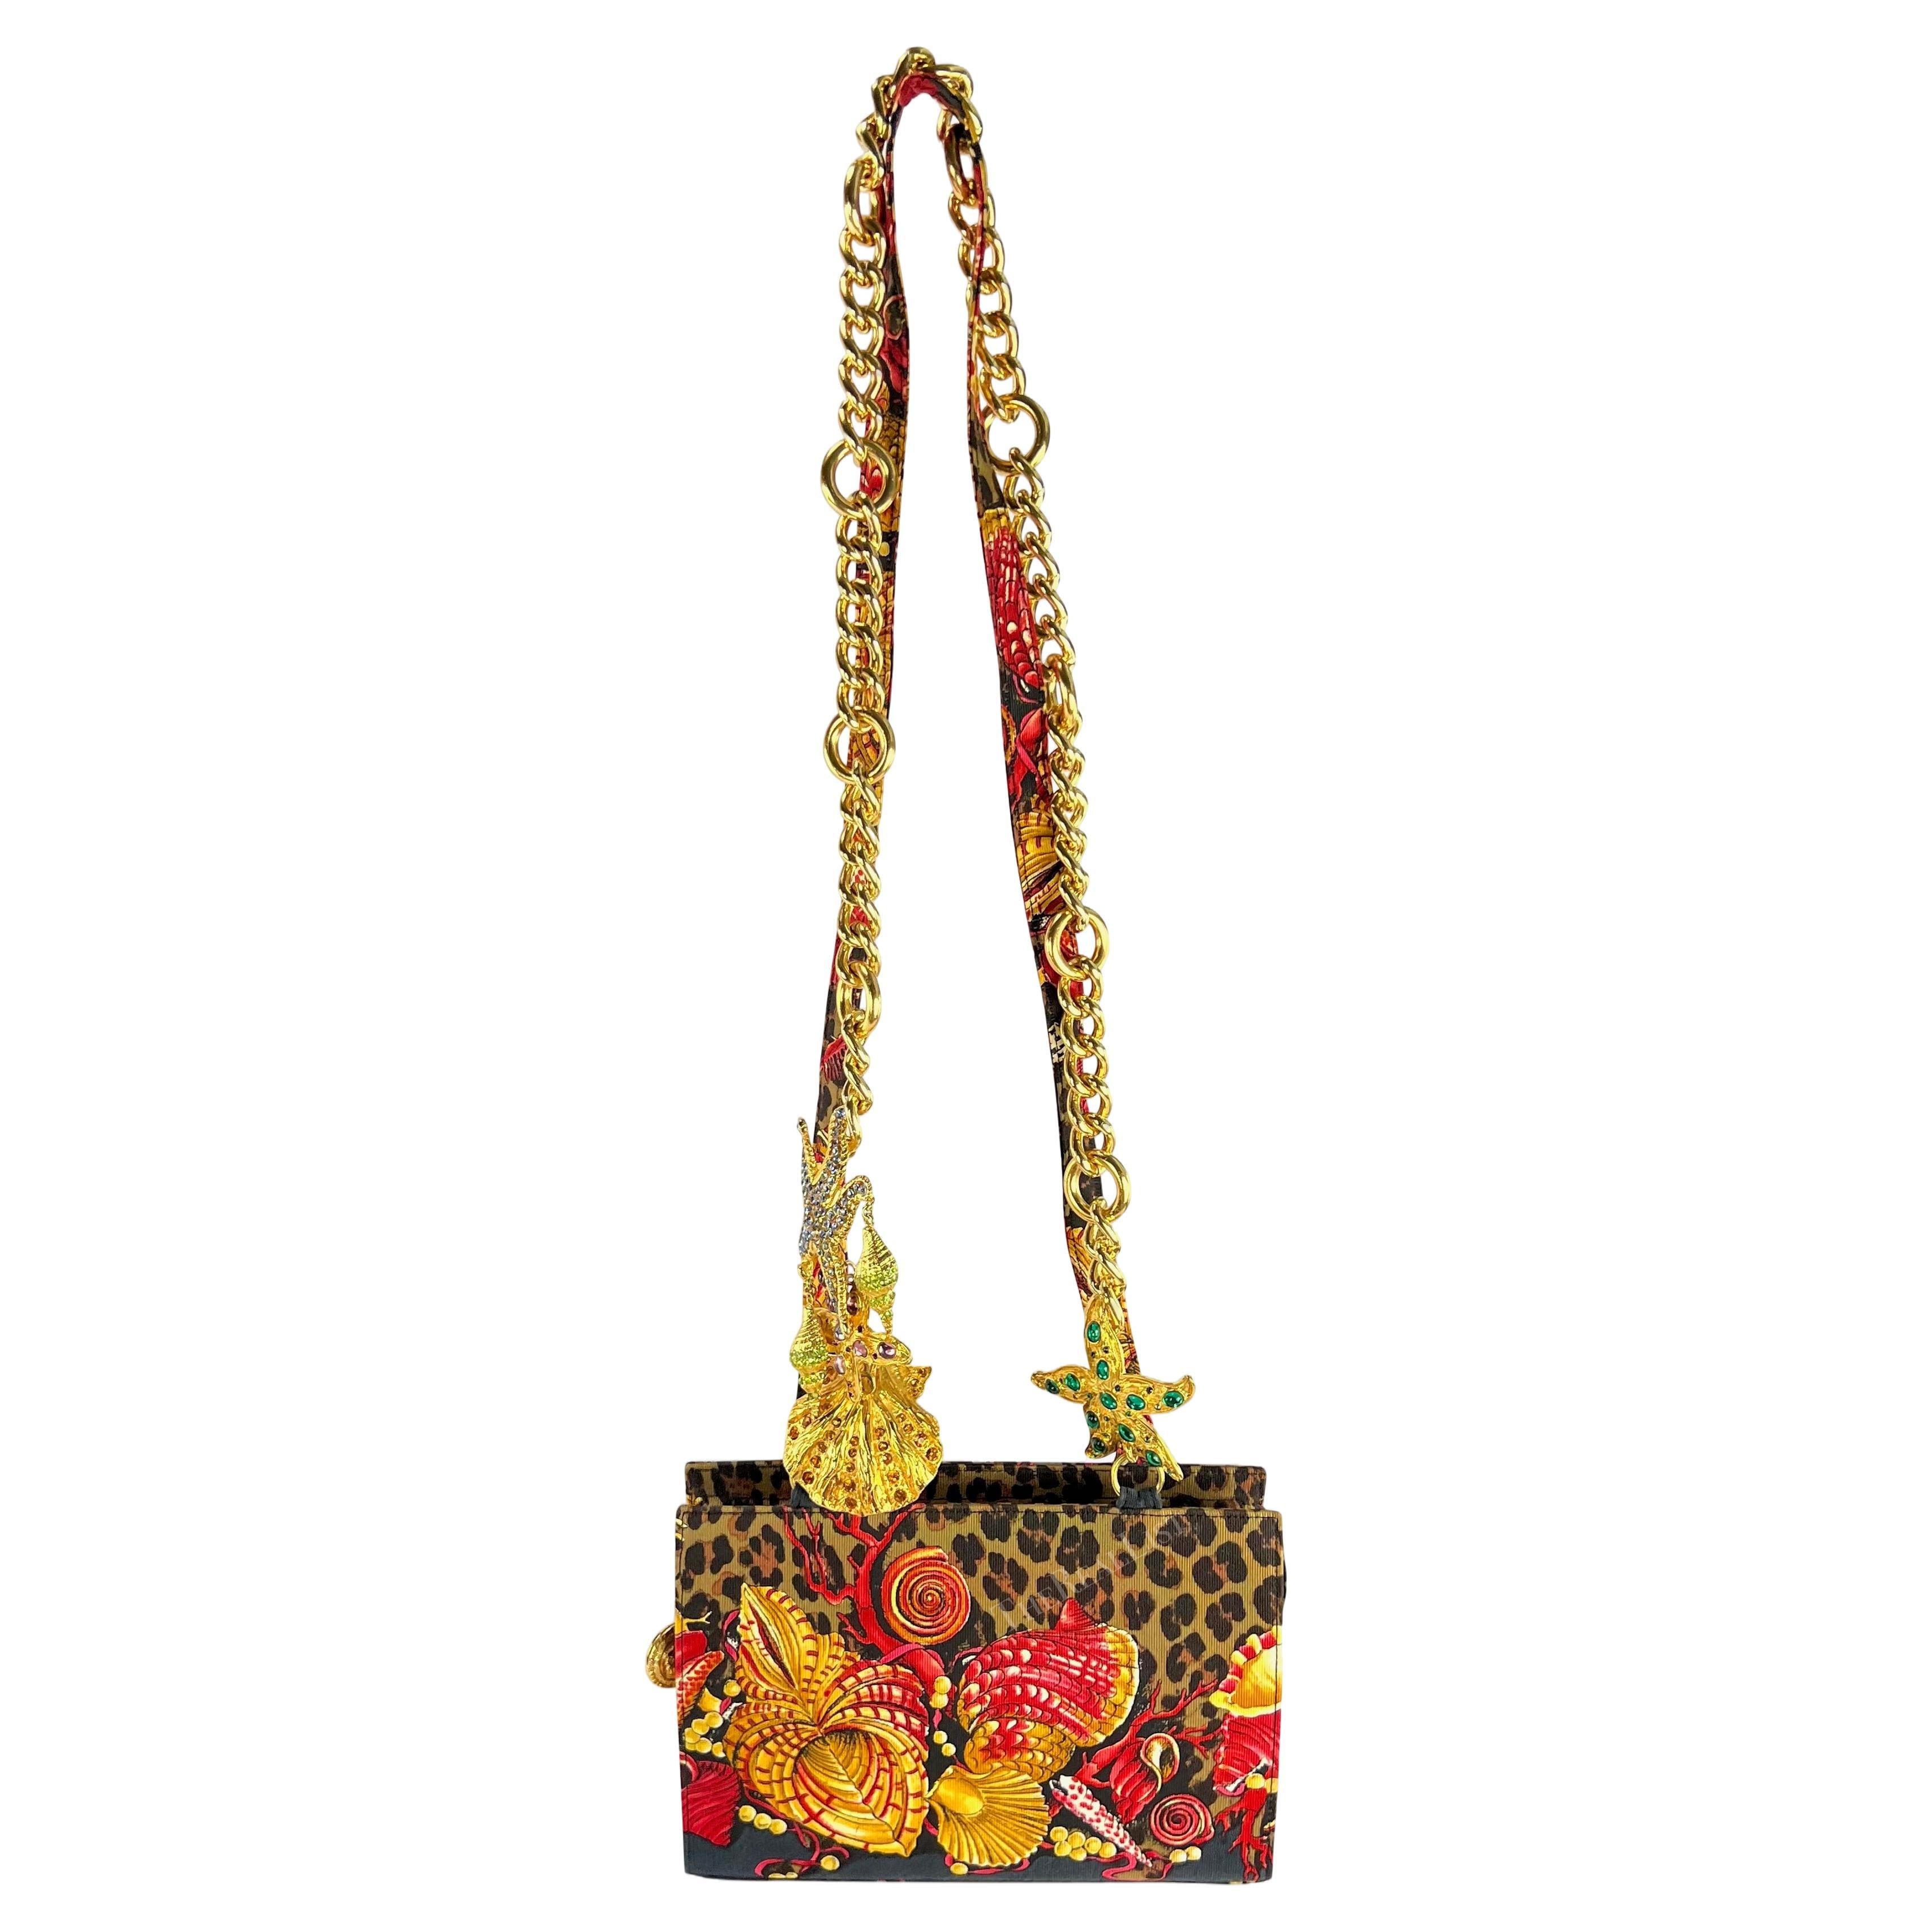 S/S 1992 Gianni Versace Runway Rhinestone Gold Shell Jewel Chain Crossbody Bag  For Sale